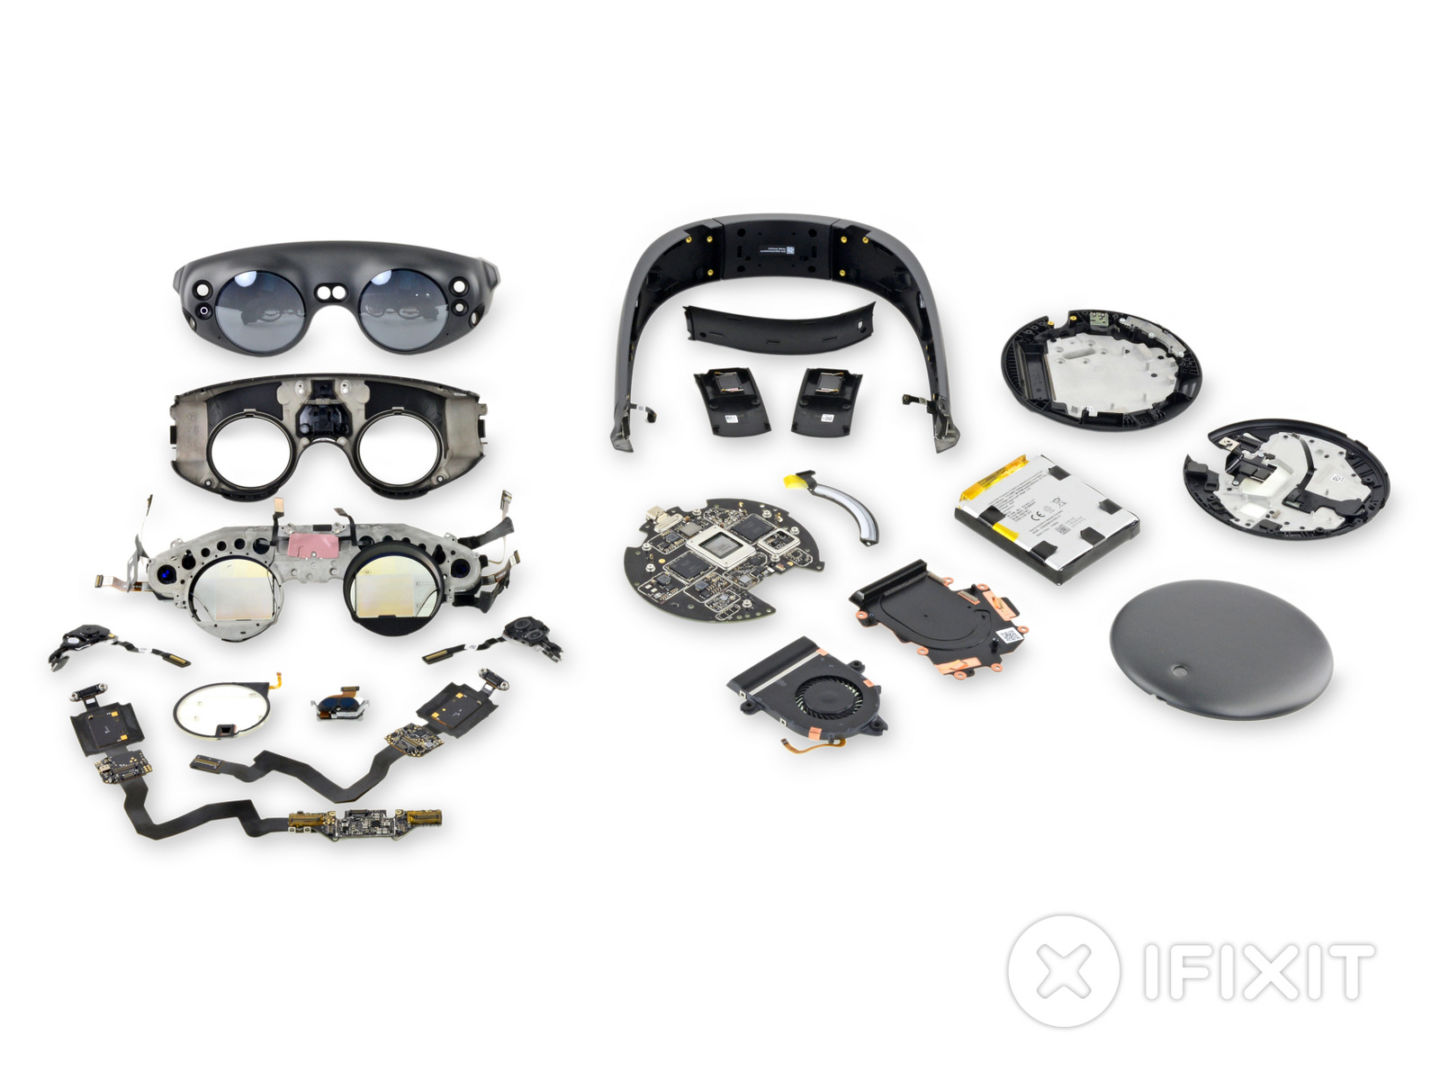 Очки Magic Leap One — очки за $2295 с ремонтопригодностью 3 из 10 - 3